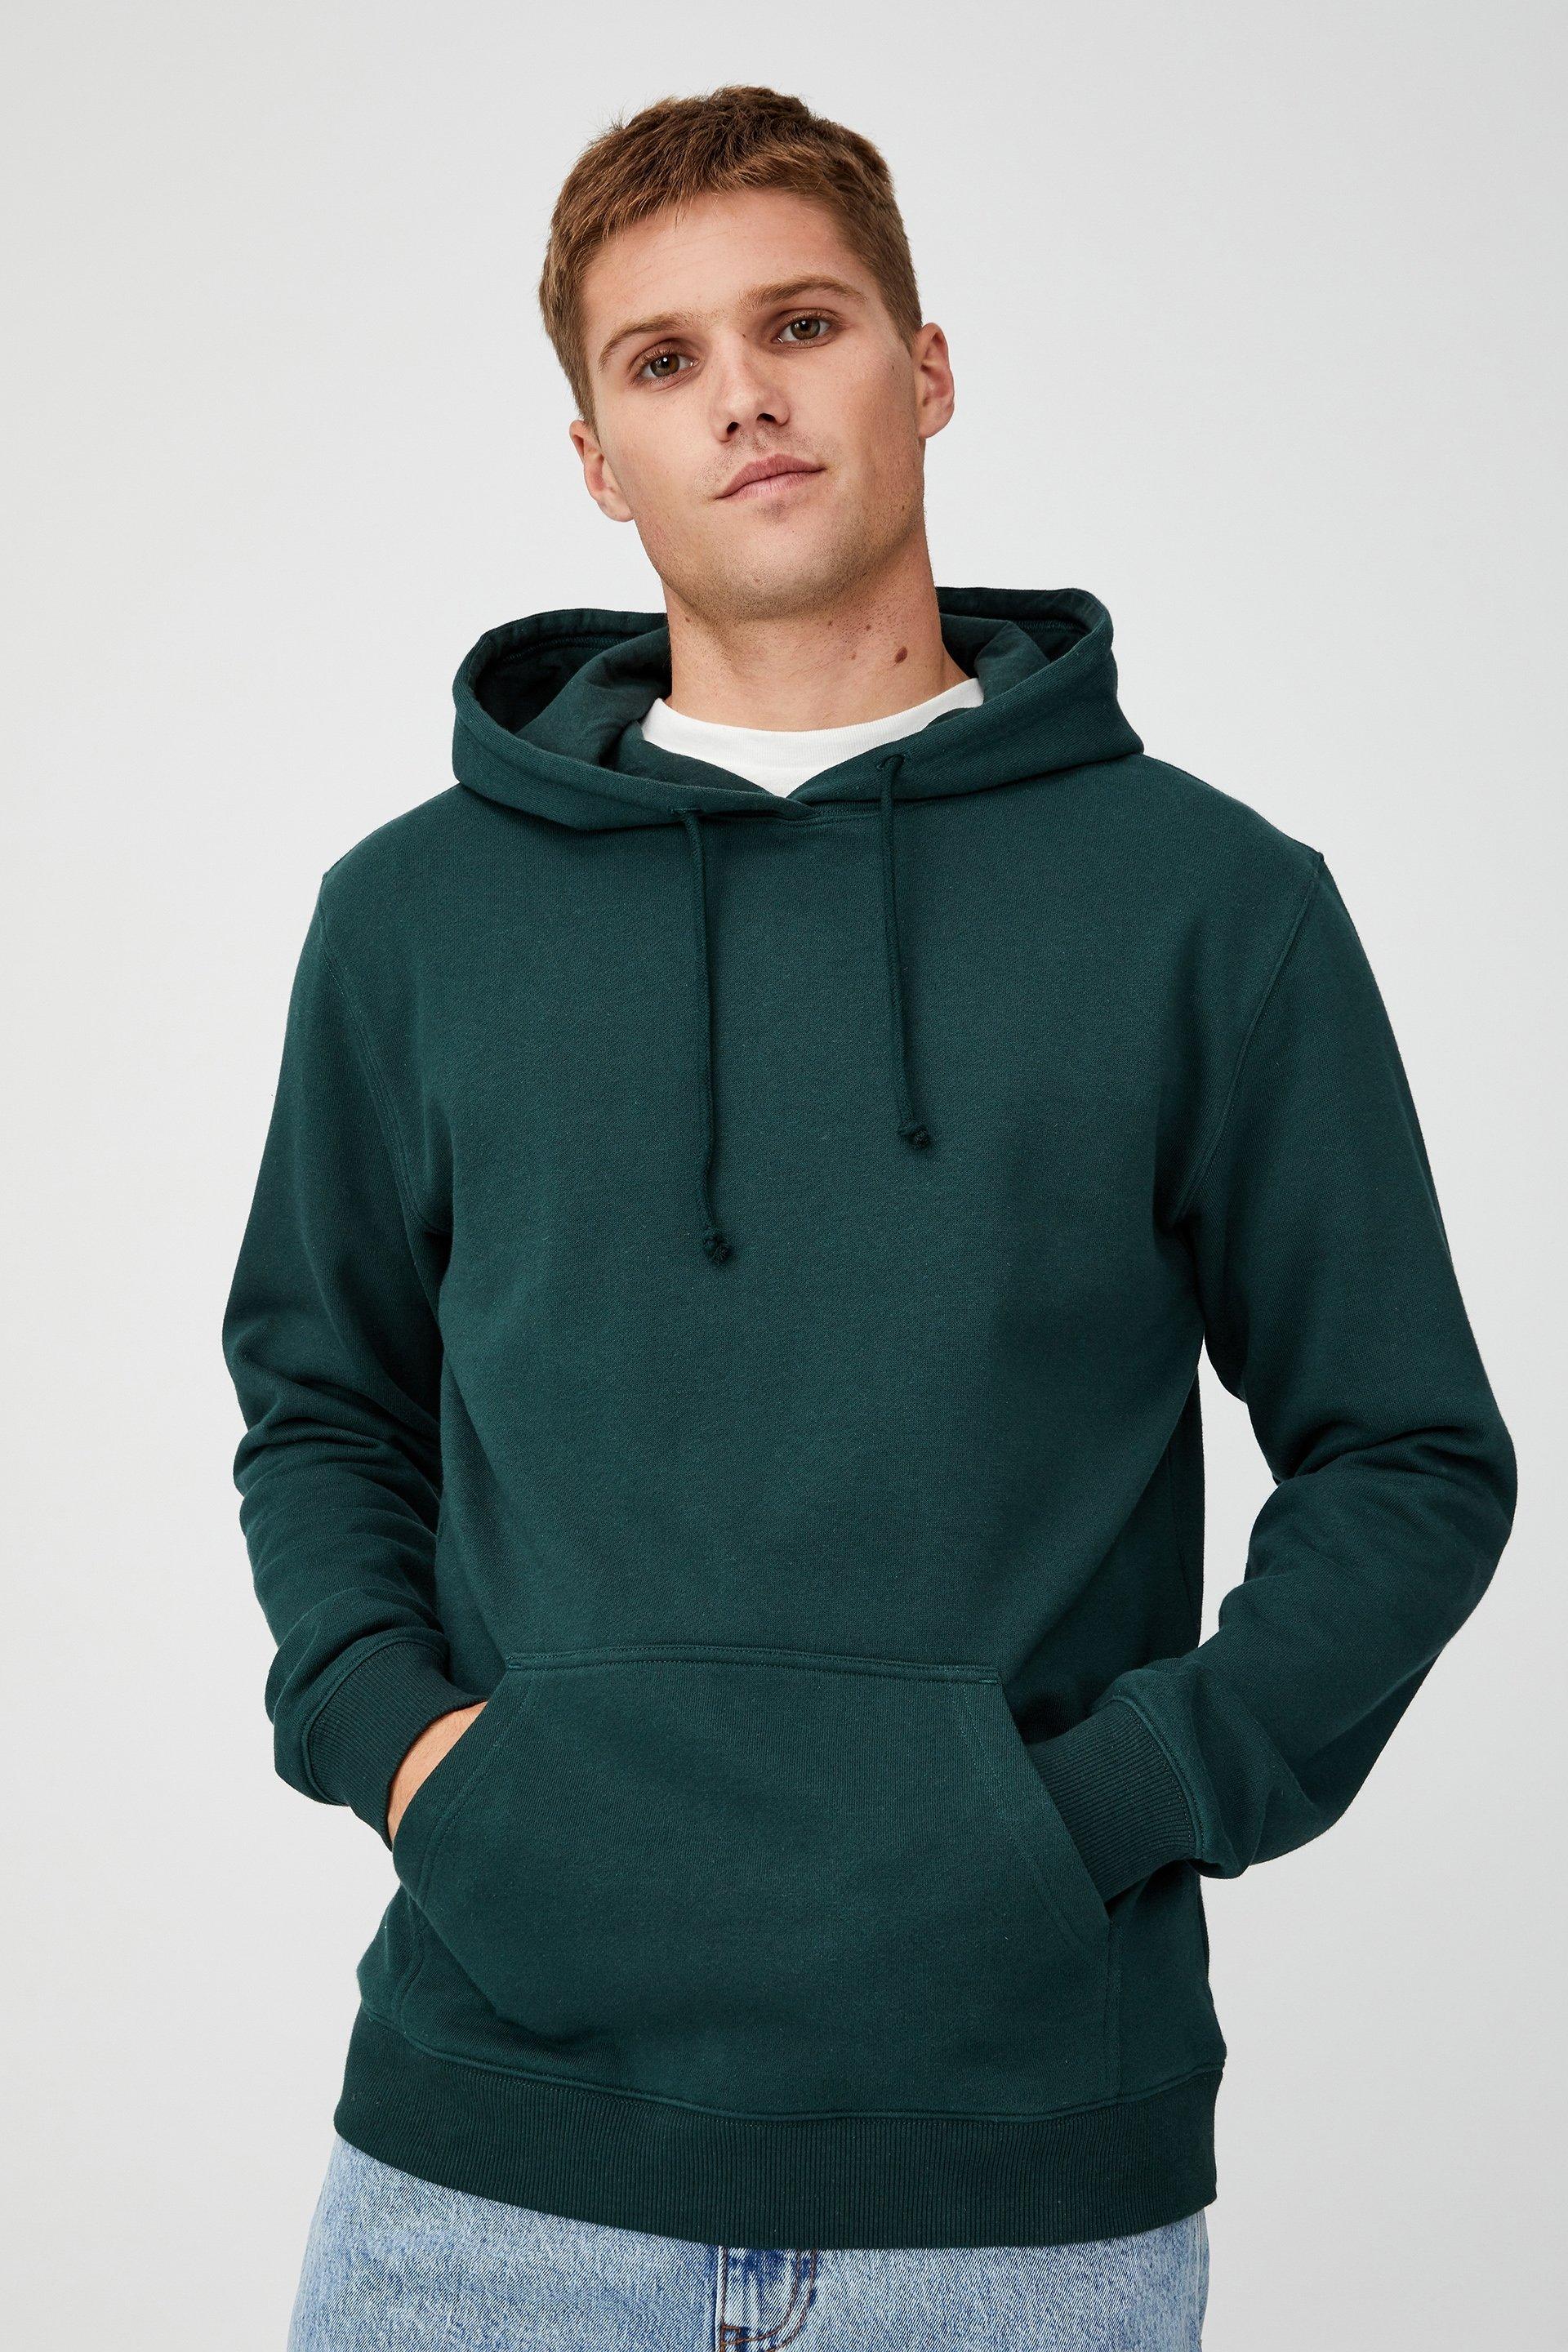 Essential fleece pullover - varsity green Cotton On Hoodies & Sweats ...